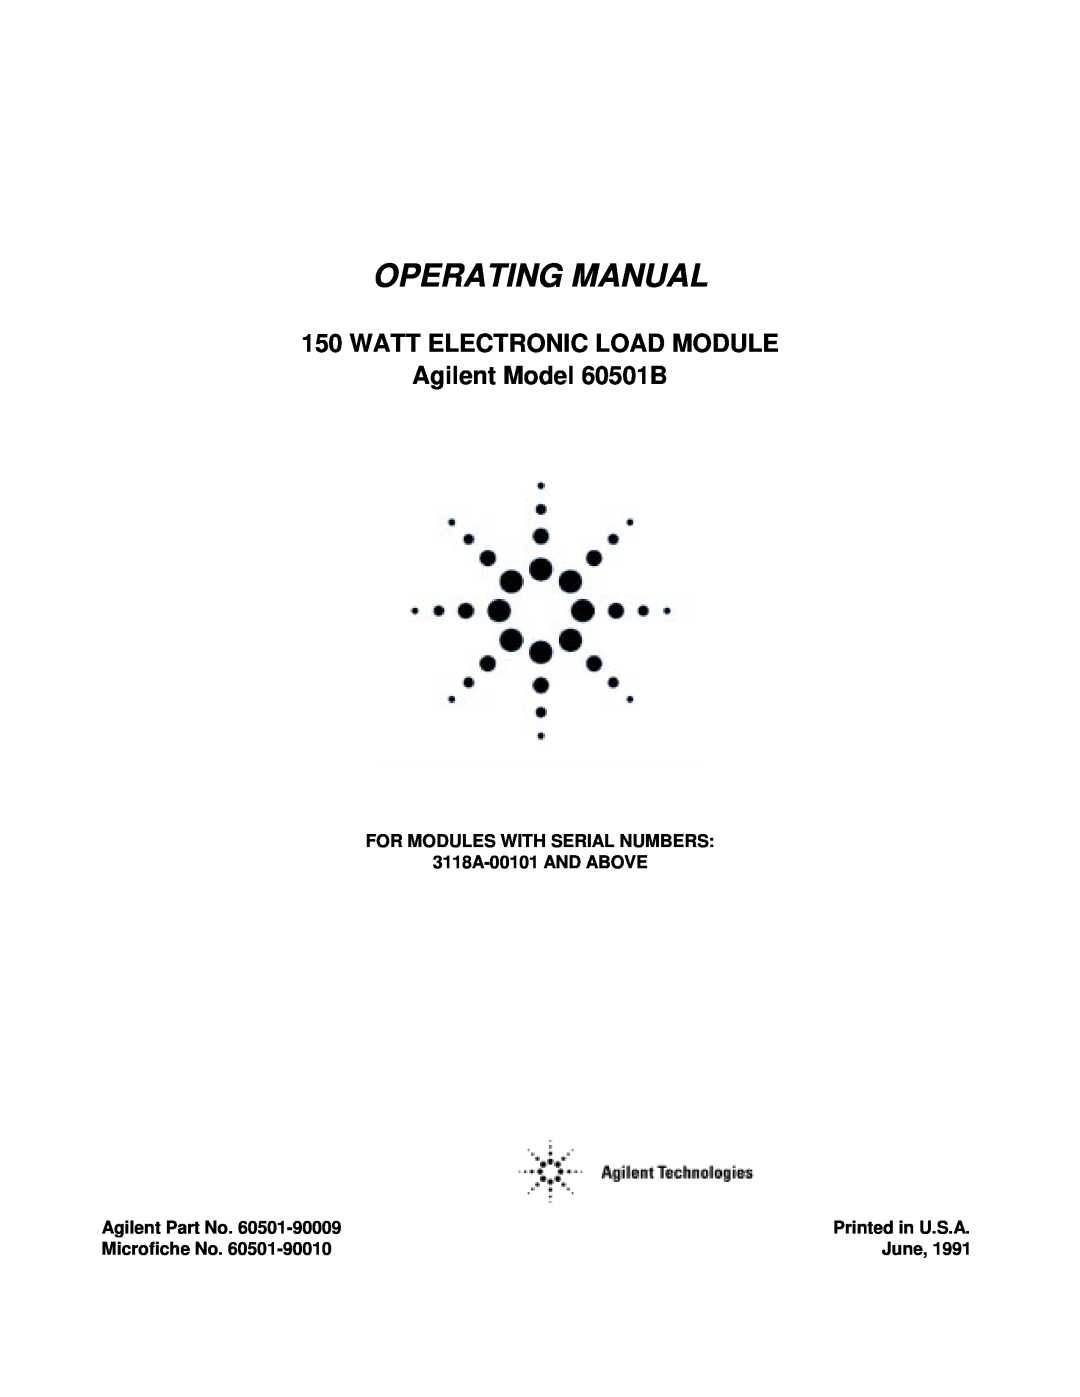 Agilent Technologies manual WATT ELECTRONIC LOAD MODULE Agilent Model 60501B, Operating Manual, Printed in U.S.A 